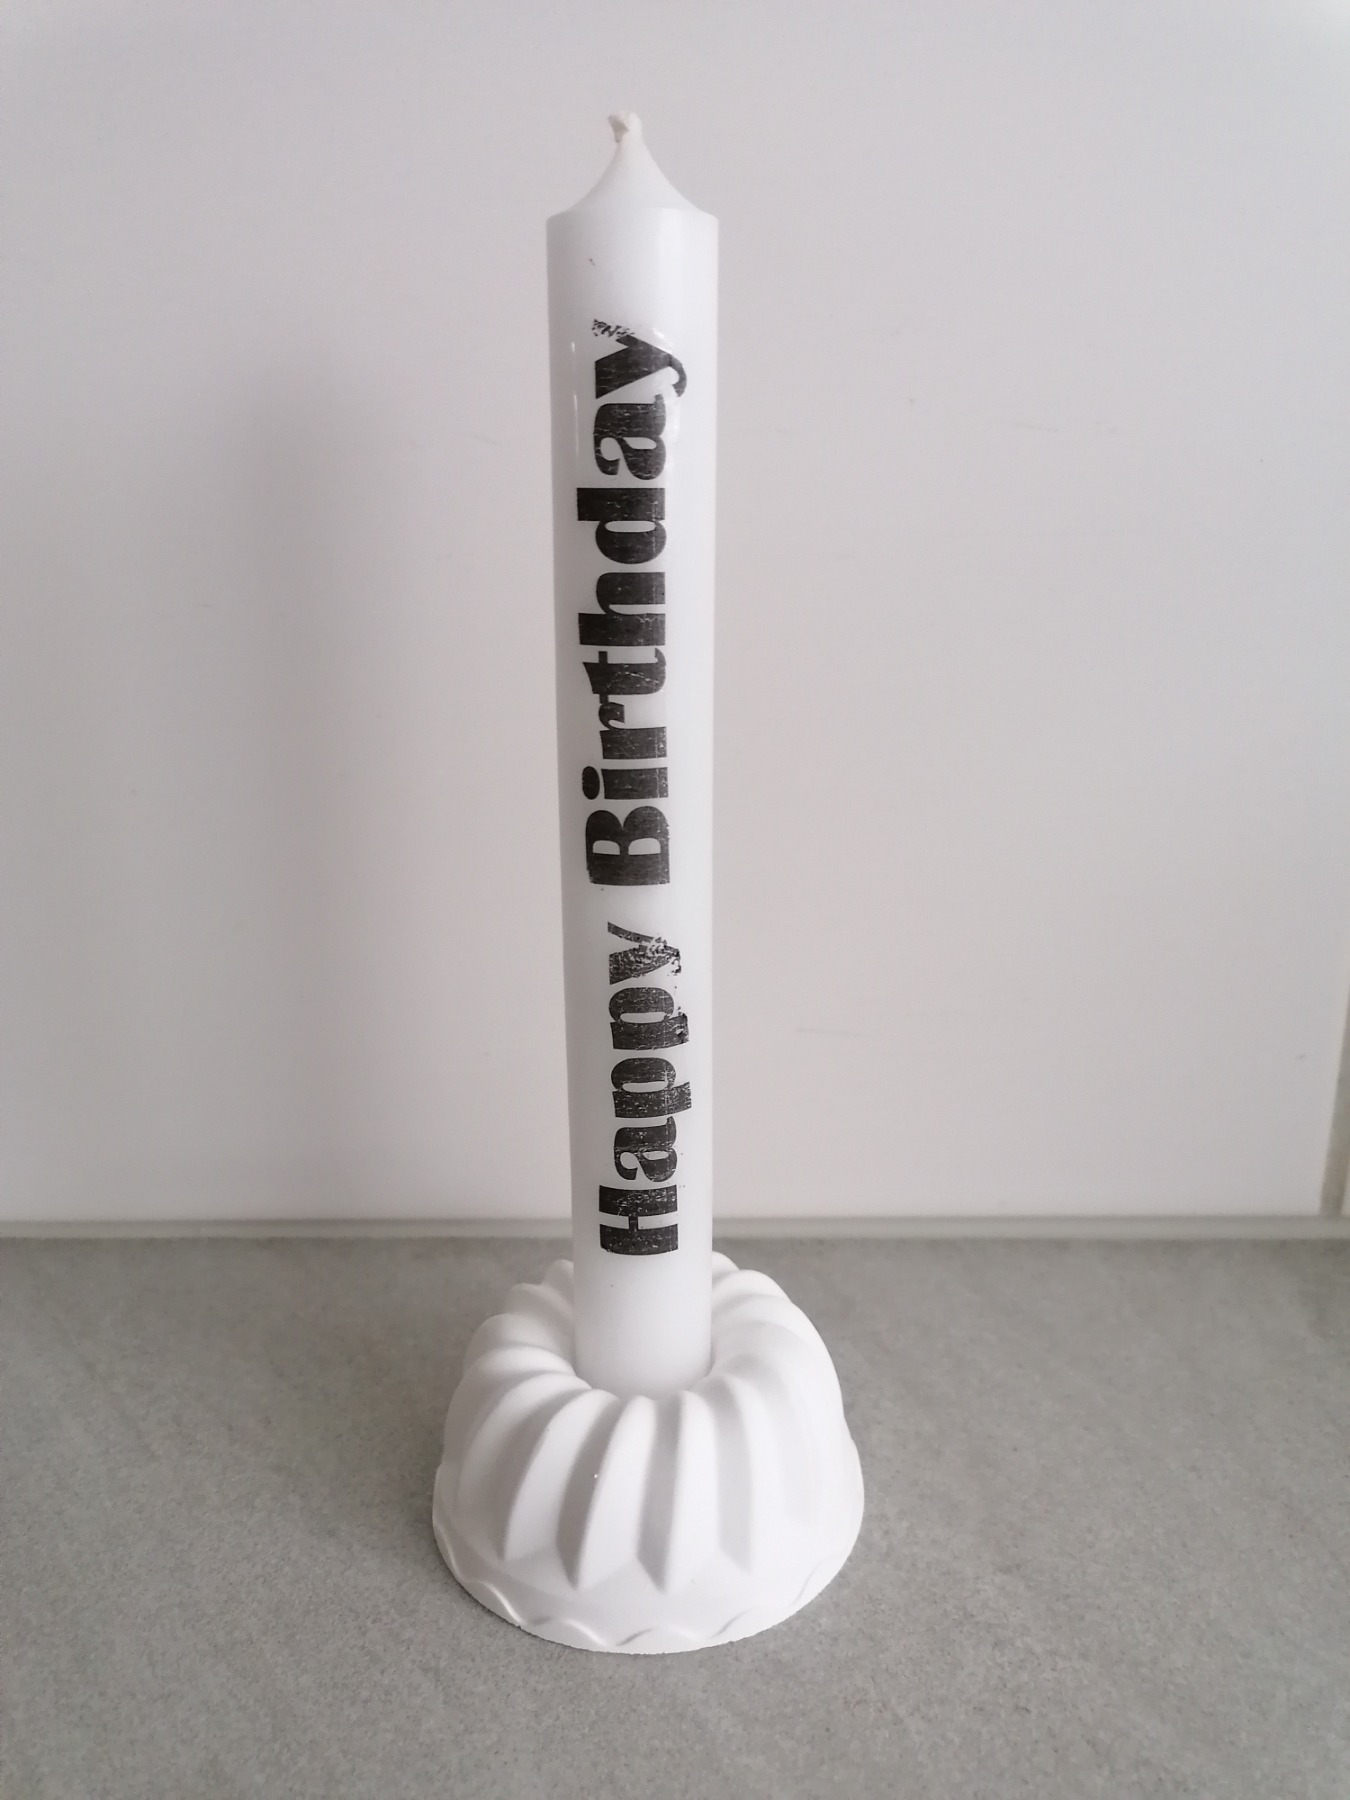 Kerzenständer Gugelhupf mit Kerze zum Geburtstag aus Keraflott Beton, Raysin, Keramik 4